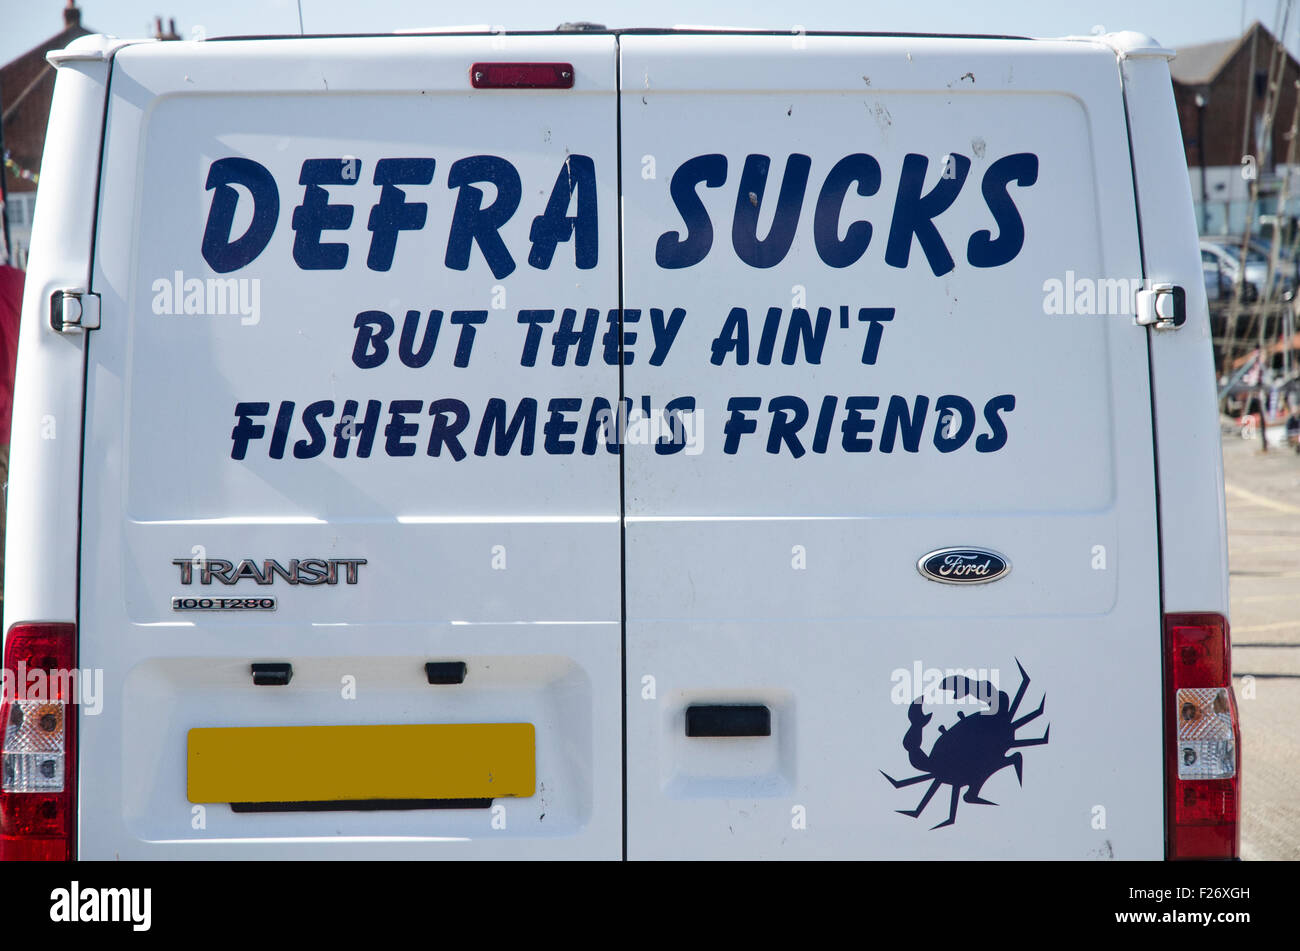 Defra Sucks but they ain't fishermen's friends Stock Photo